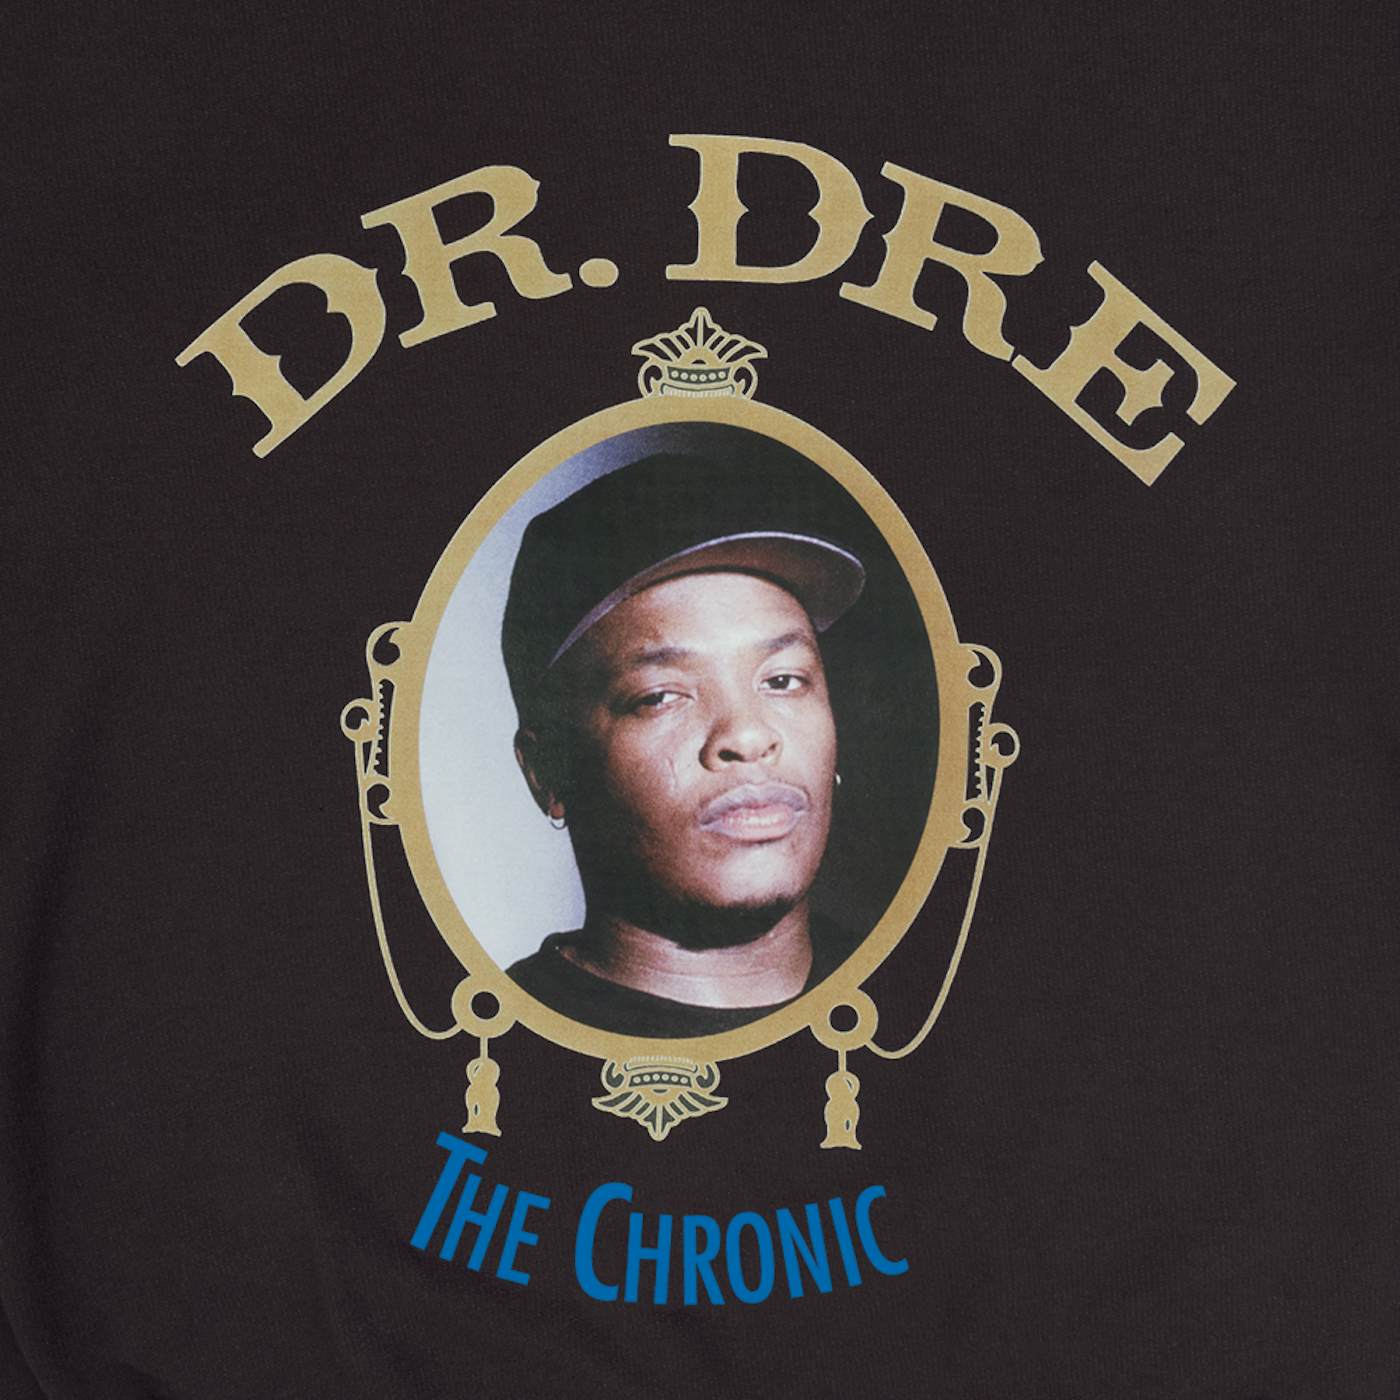 Dr. Dre The Chronic Crewneck (Off Black)